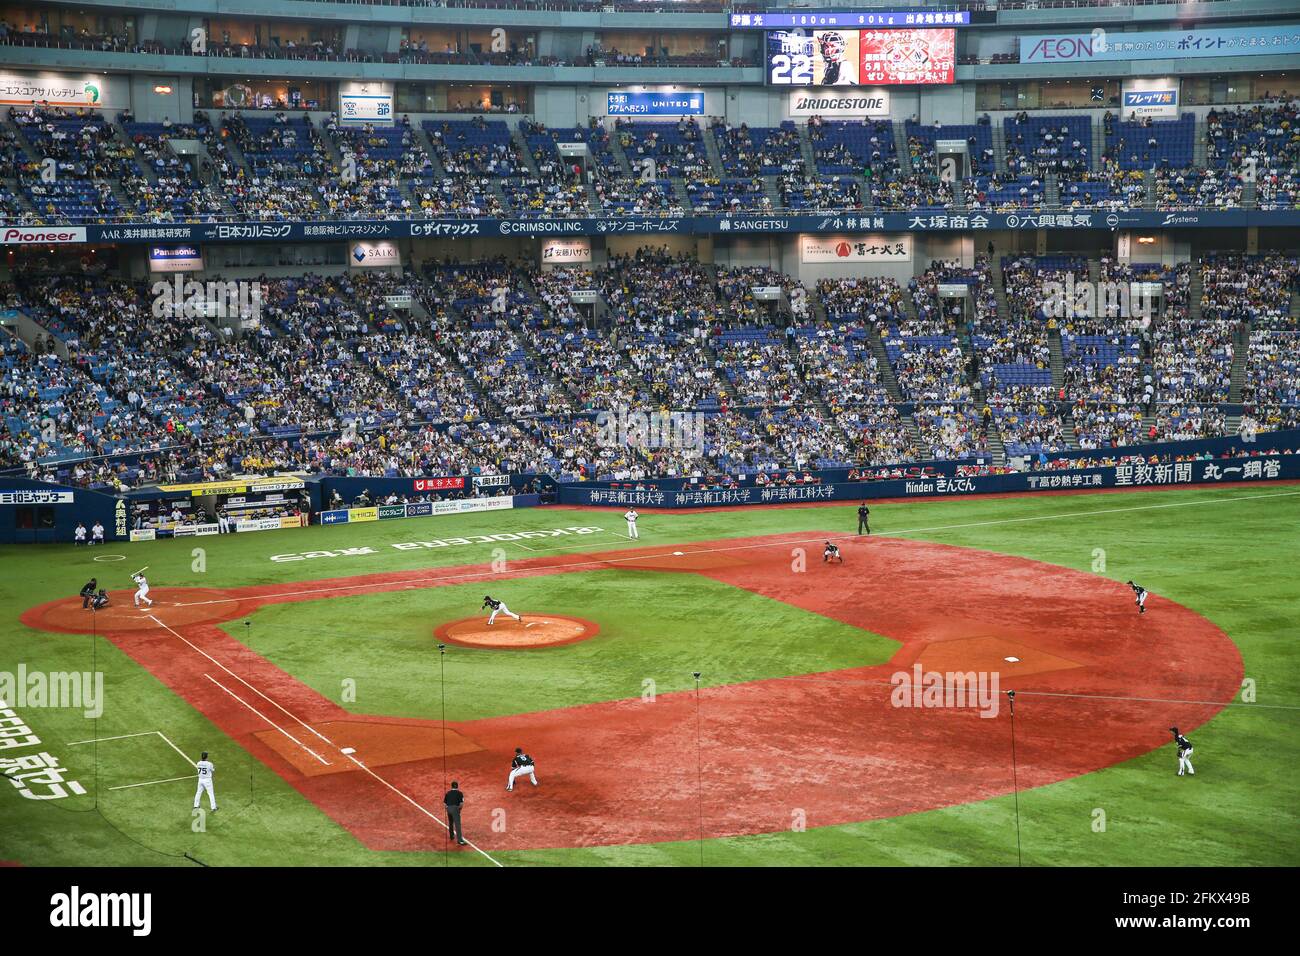 Le Kyocera Dome Osaka, stade de l'équipe de baseball japonaise des Orix Buffaloes, joue ici avec ses rivaux les Tigers Hanshin d'Osaka. Osaka, Japon. Banque D'Images